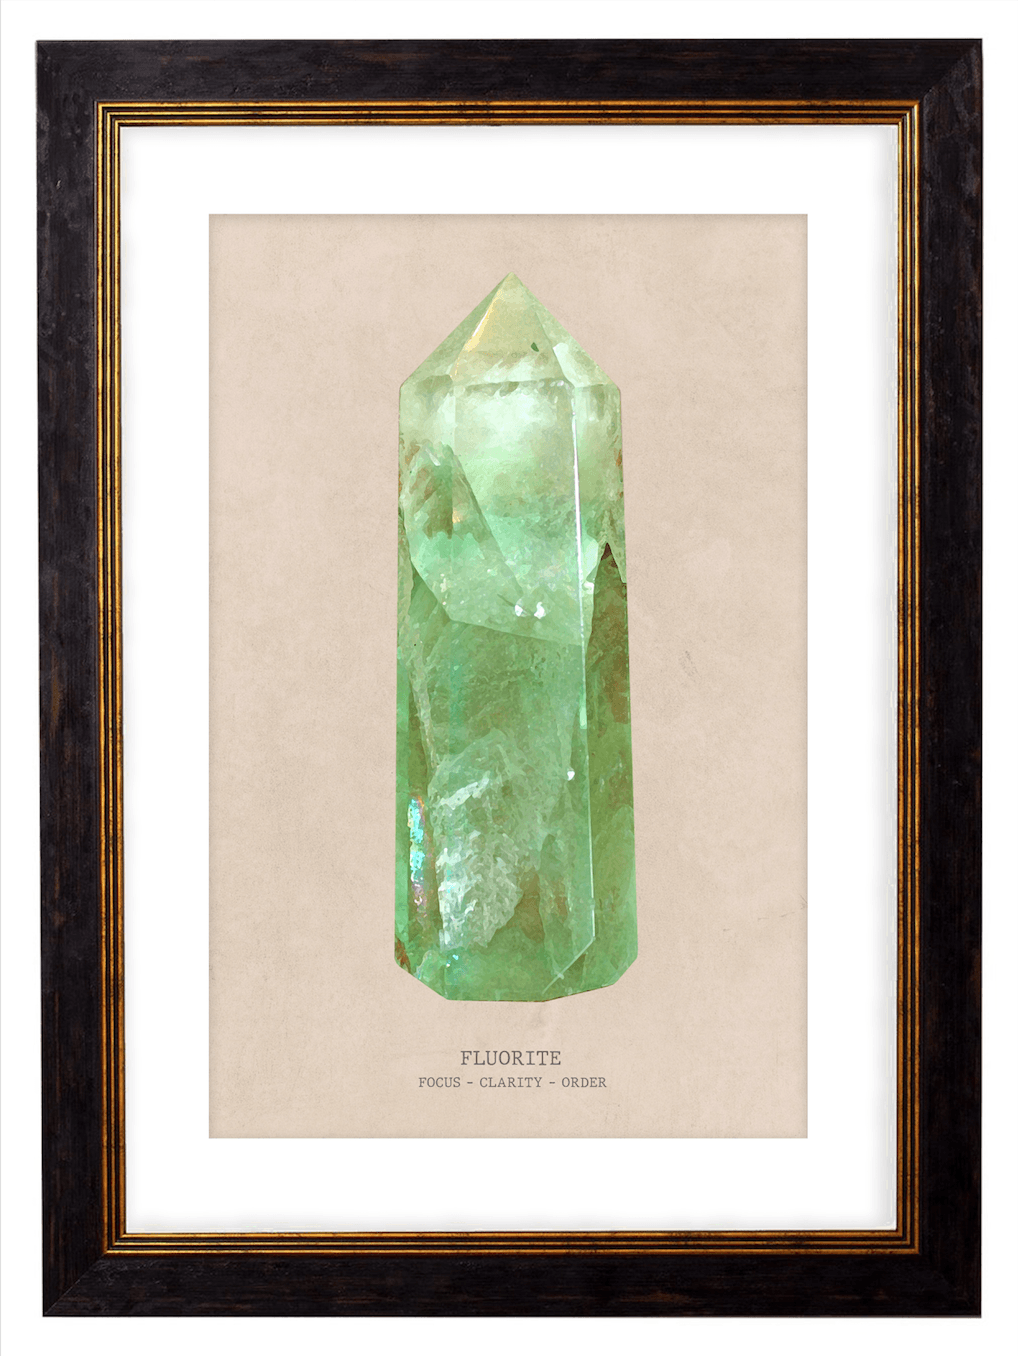 Green Fluorite Crystal Gemstone Artwork Print. Framed Healing Crystal Wall Art PictureVintage Frog T/APictures & Prints